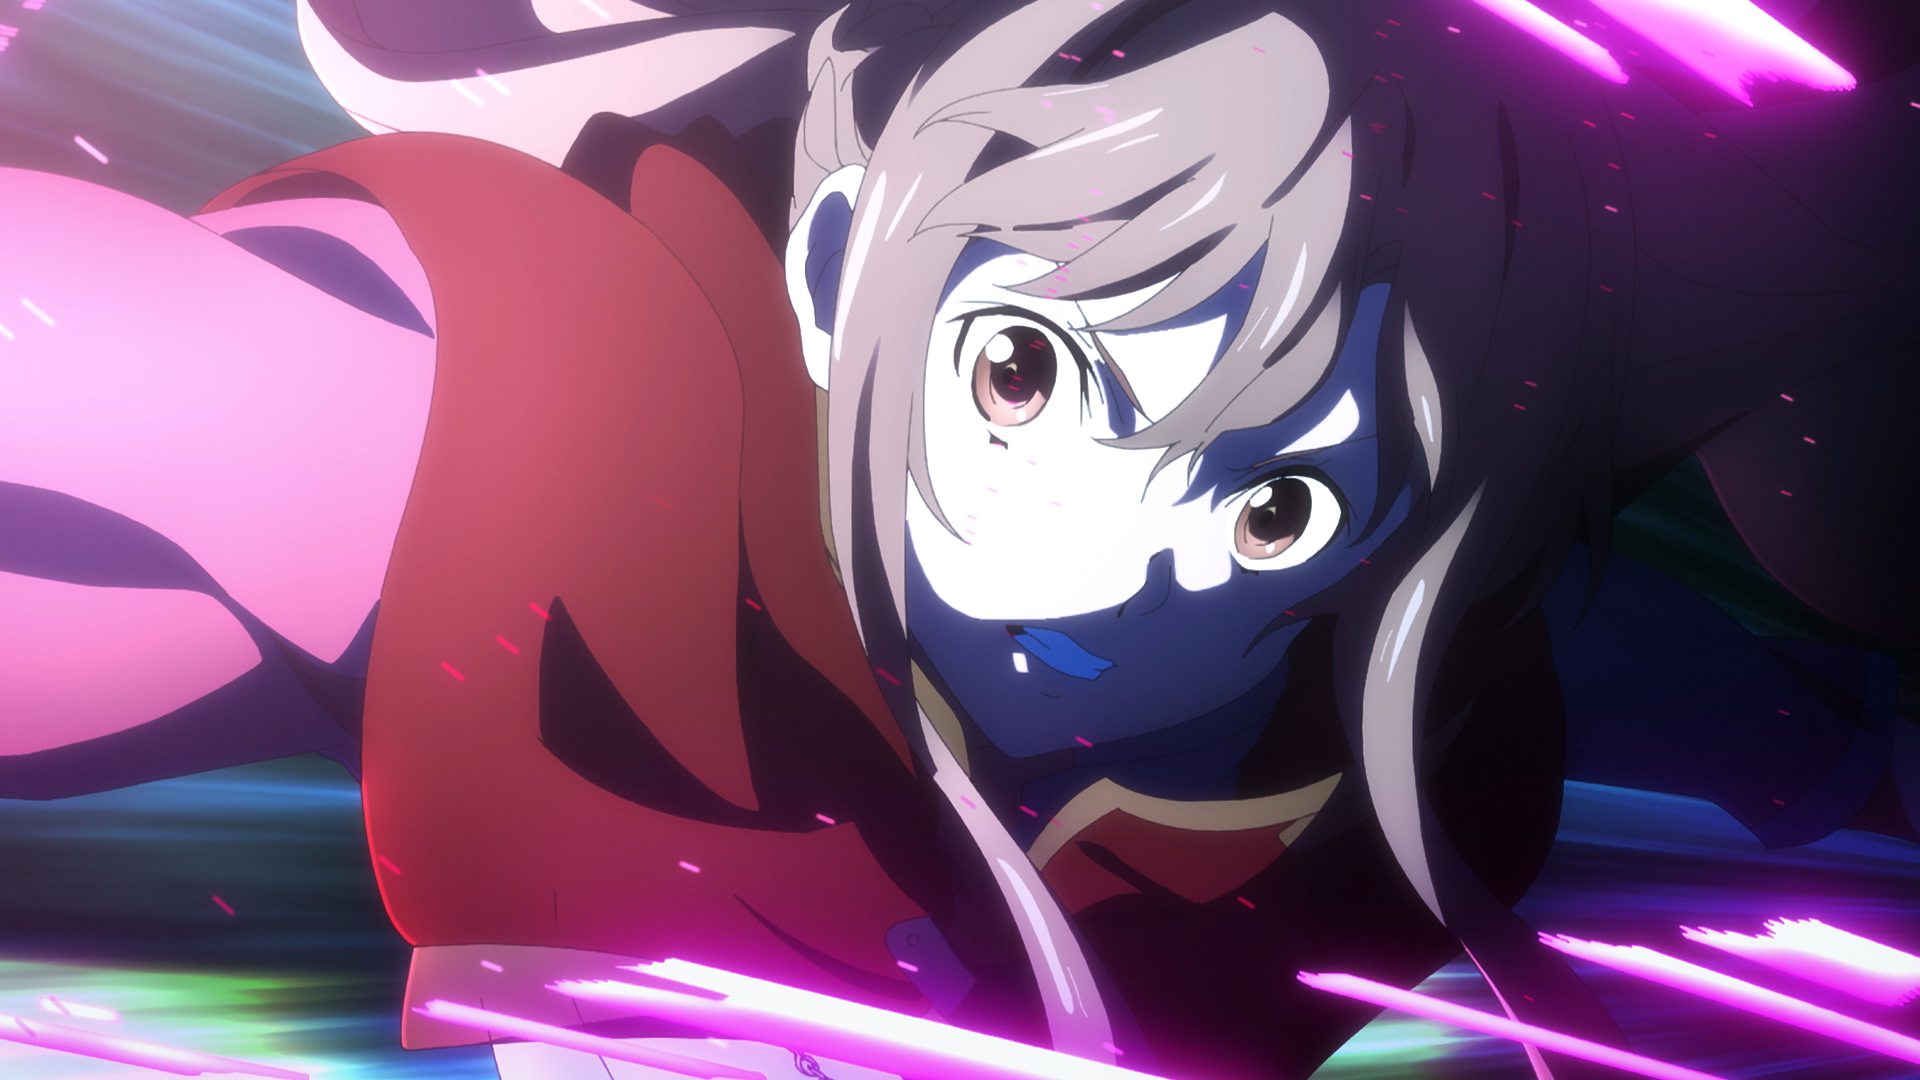 2nd Sword Art Online Progressive Anime Film will be released in IMAX format  in Japan